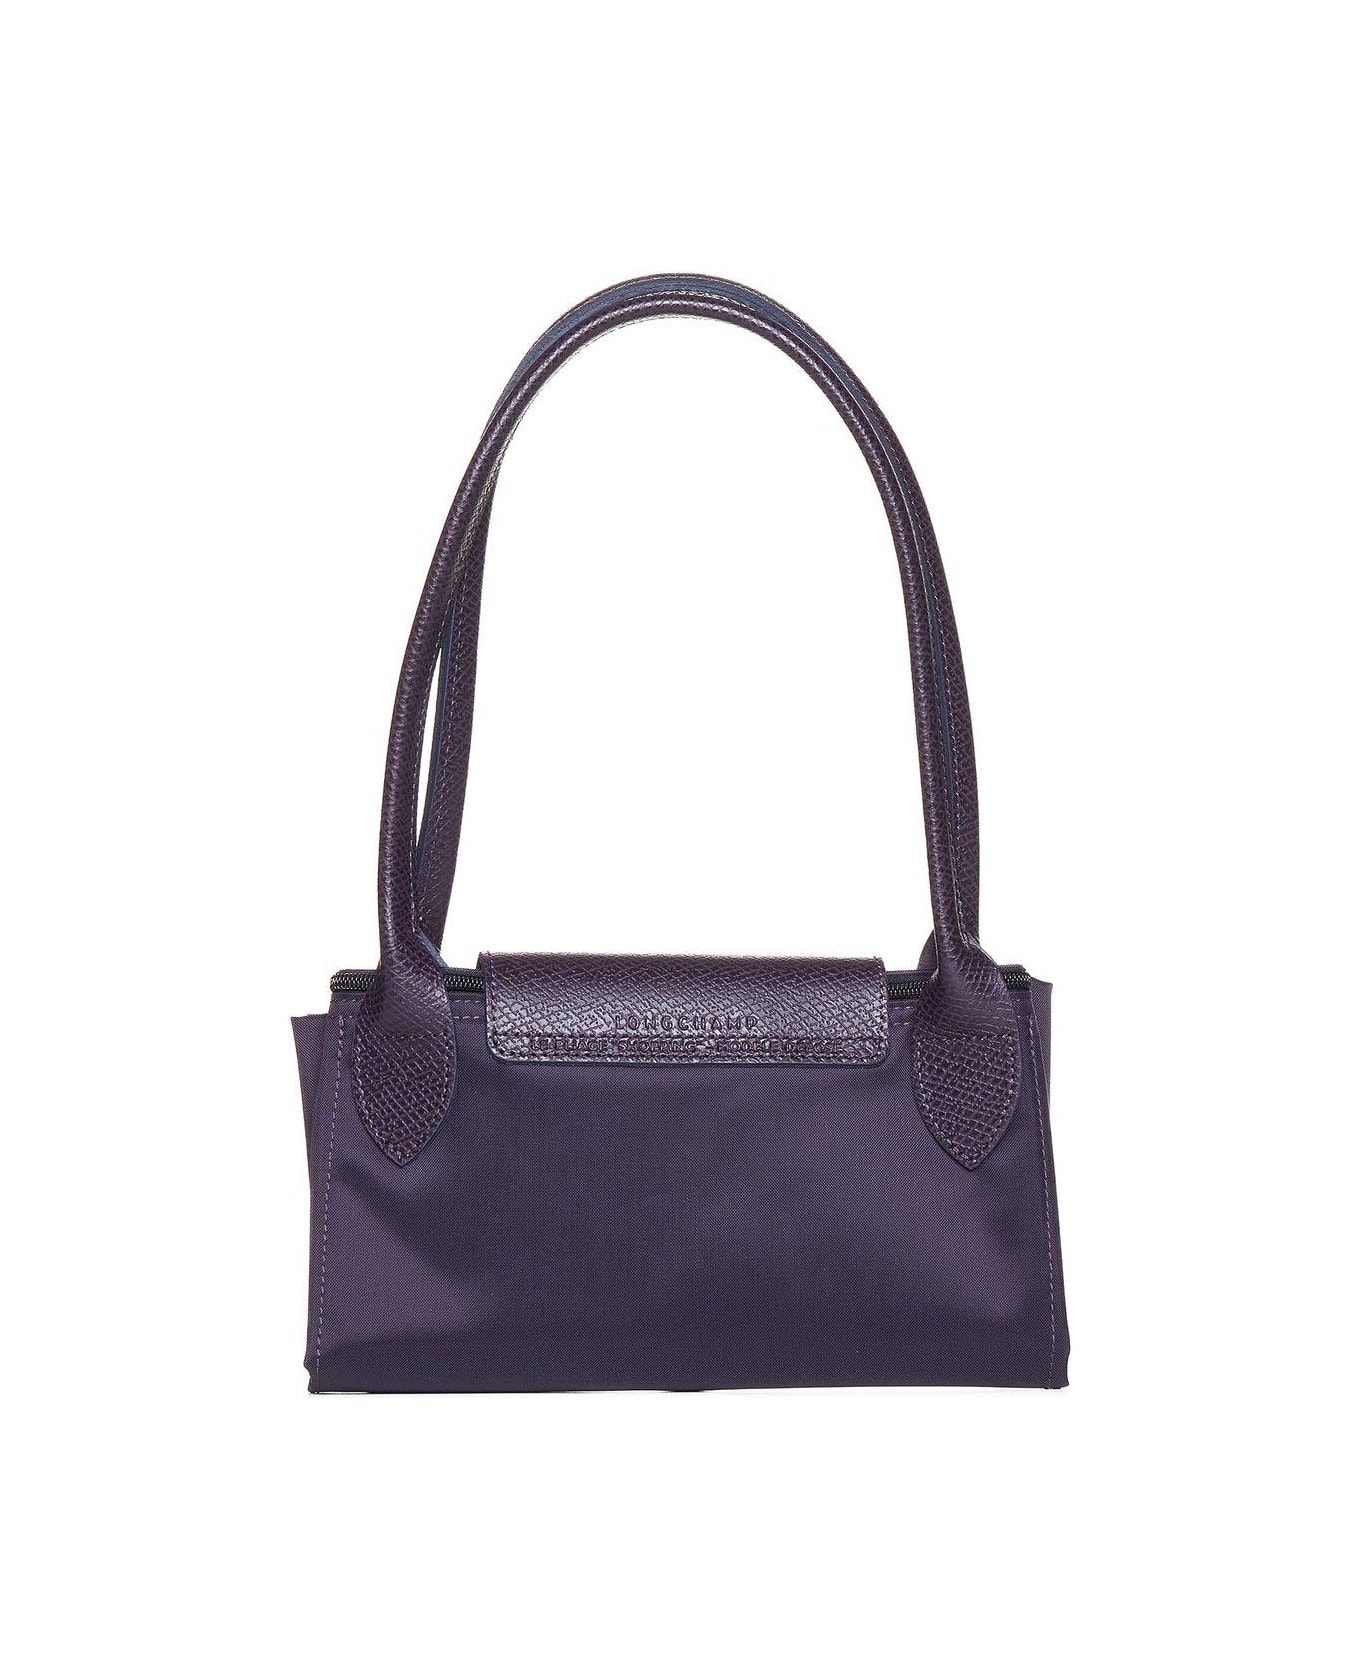 Longchamp Le Pliage Small Tote Bag - Blueberry